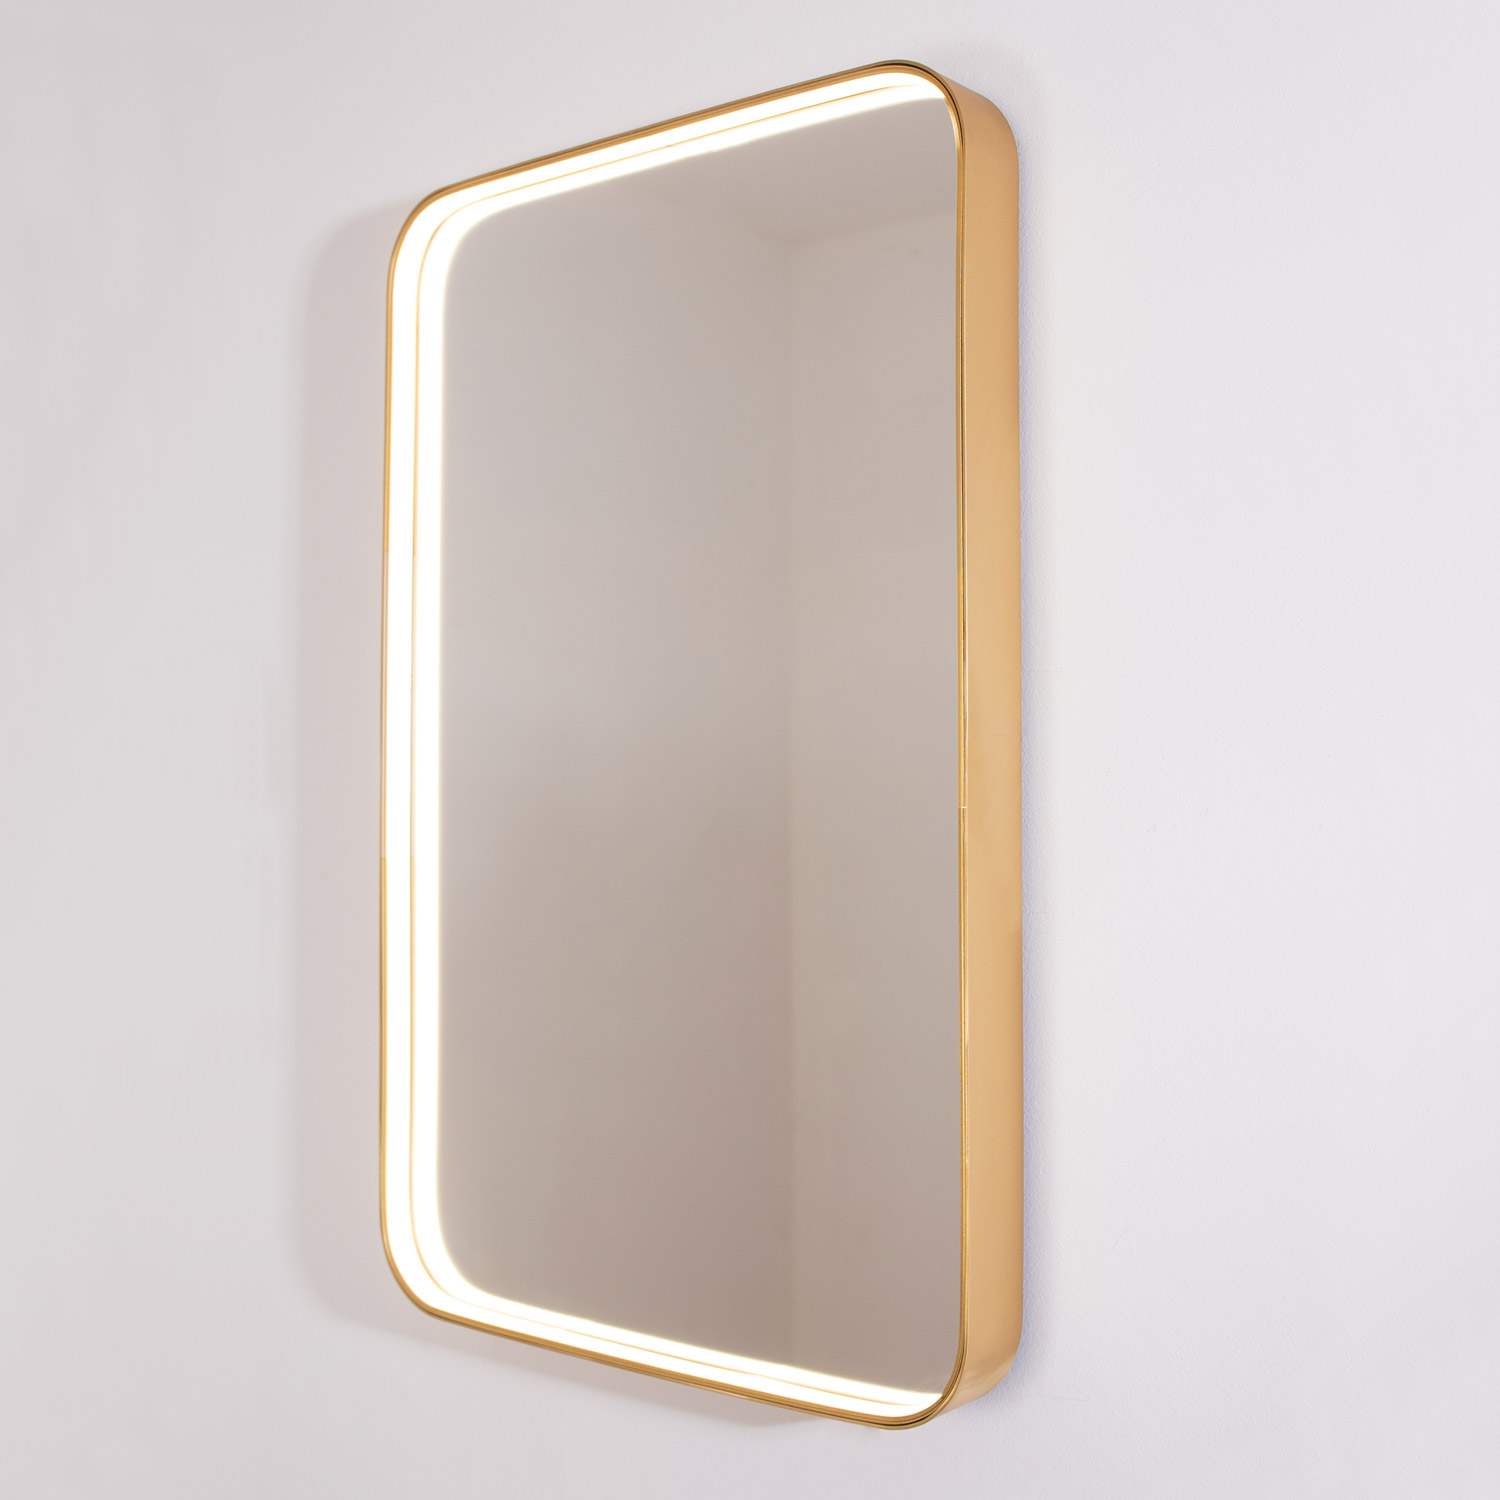 Rectangular brass mirror with light